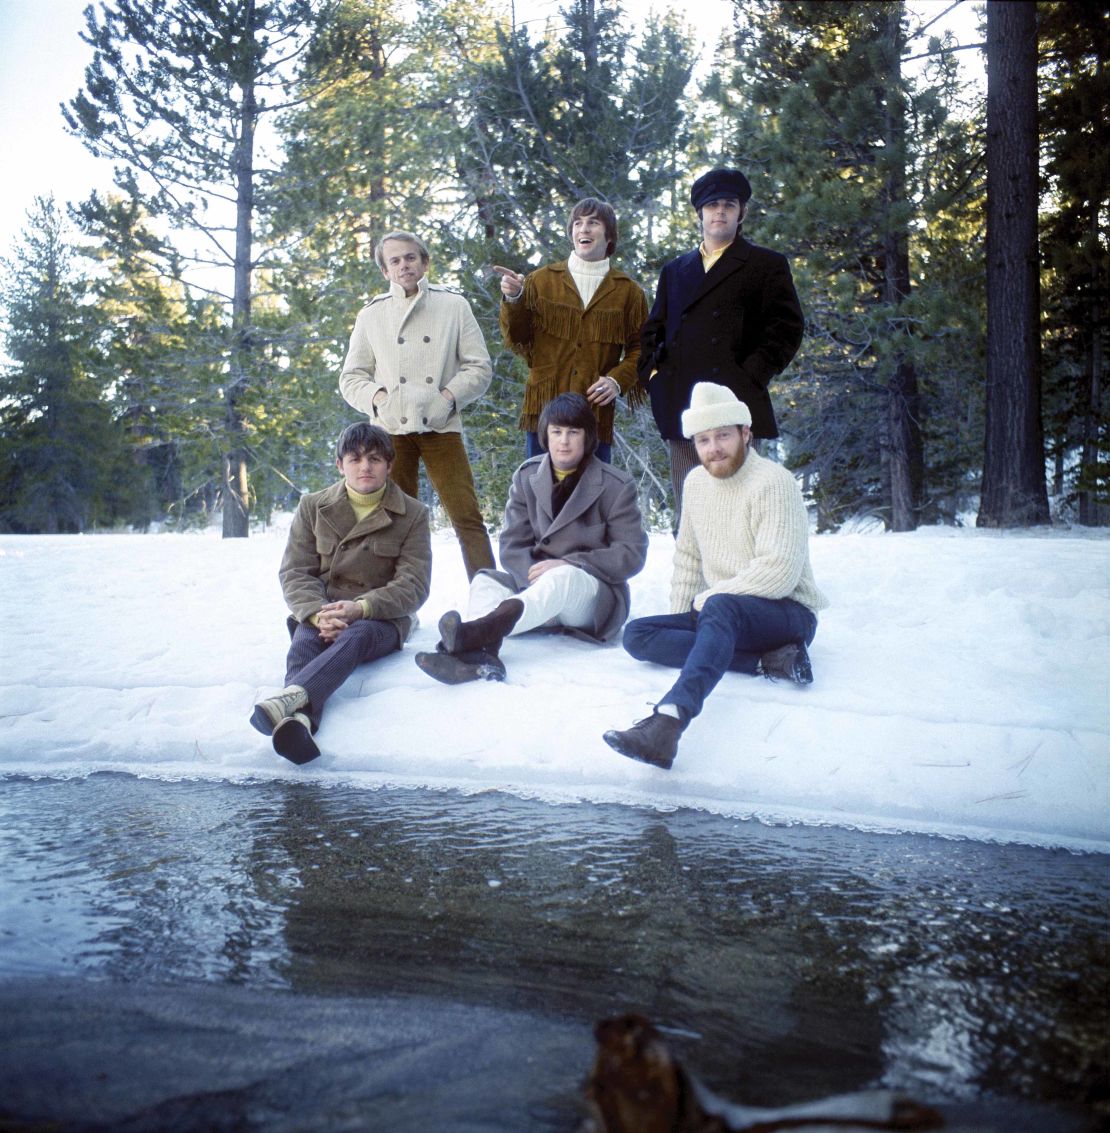 The Beach Boys circa "Smile": Clockwise from top left, Al Jardine, Dennis Wilson, Carl Wilson, Mike Love, Brian Wilson, Bruce Johnston.